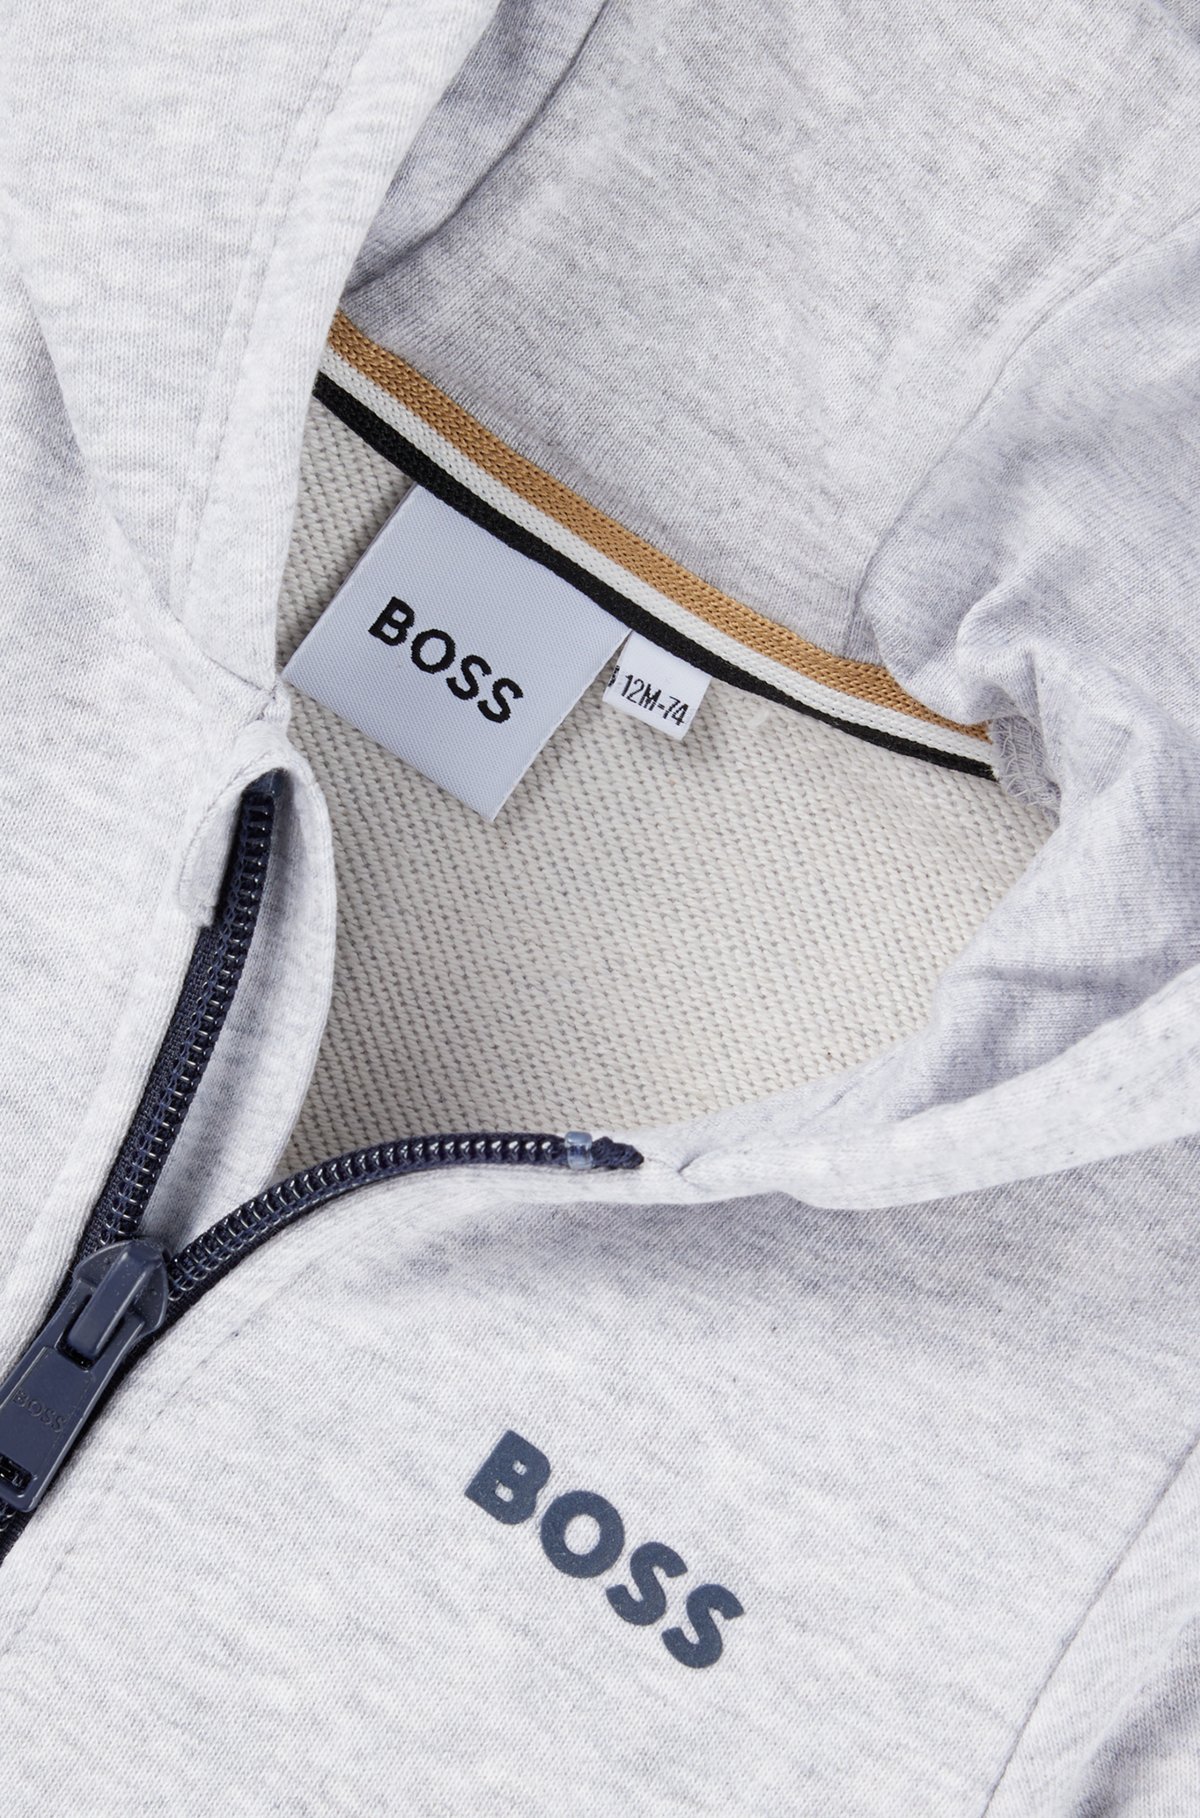 Kids' zip-up hoodie with logo print, Light Grey